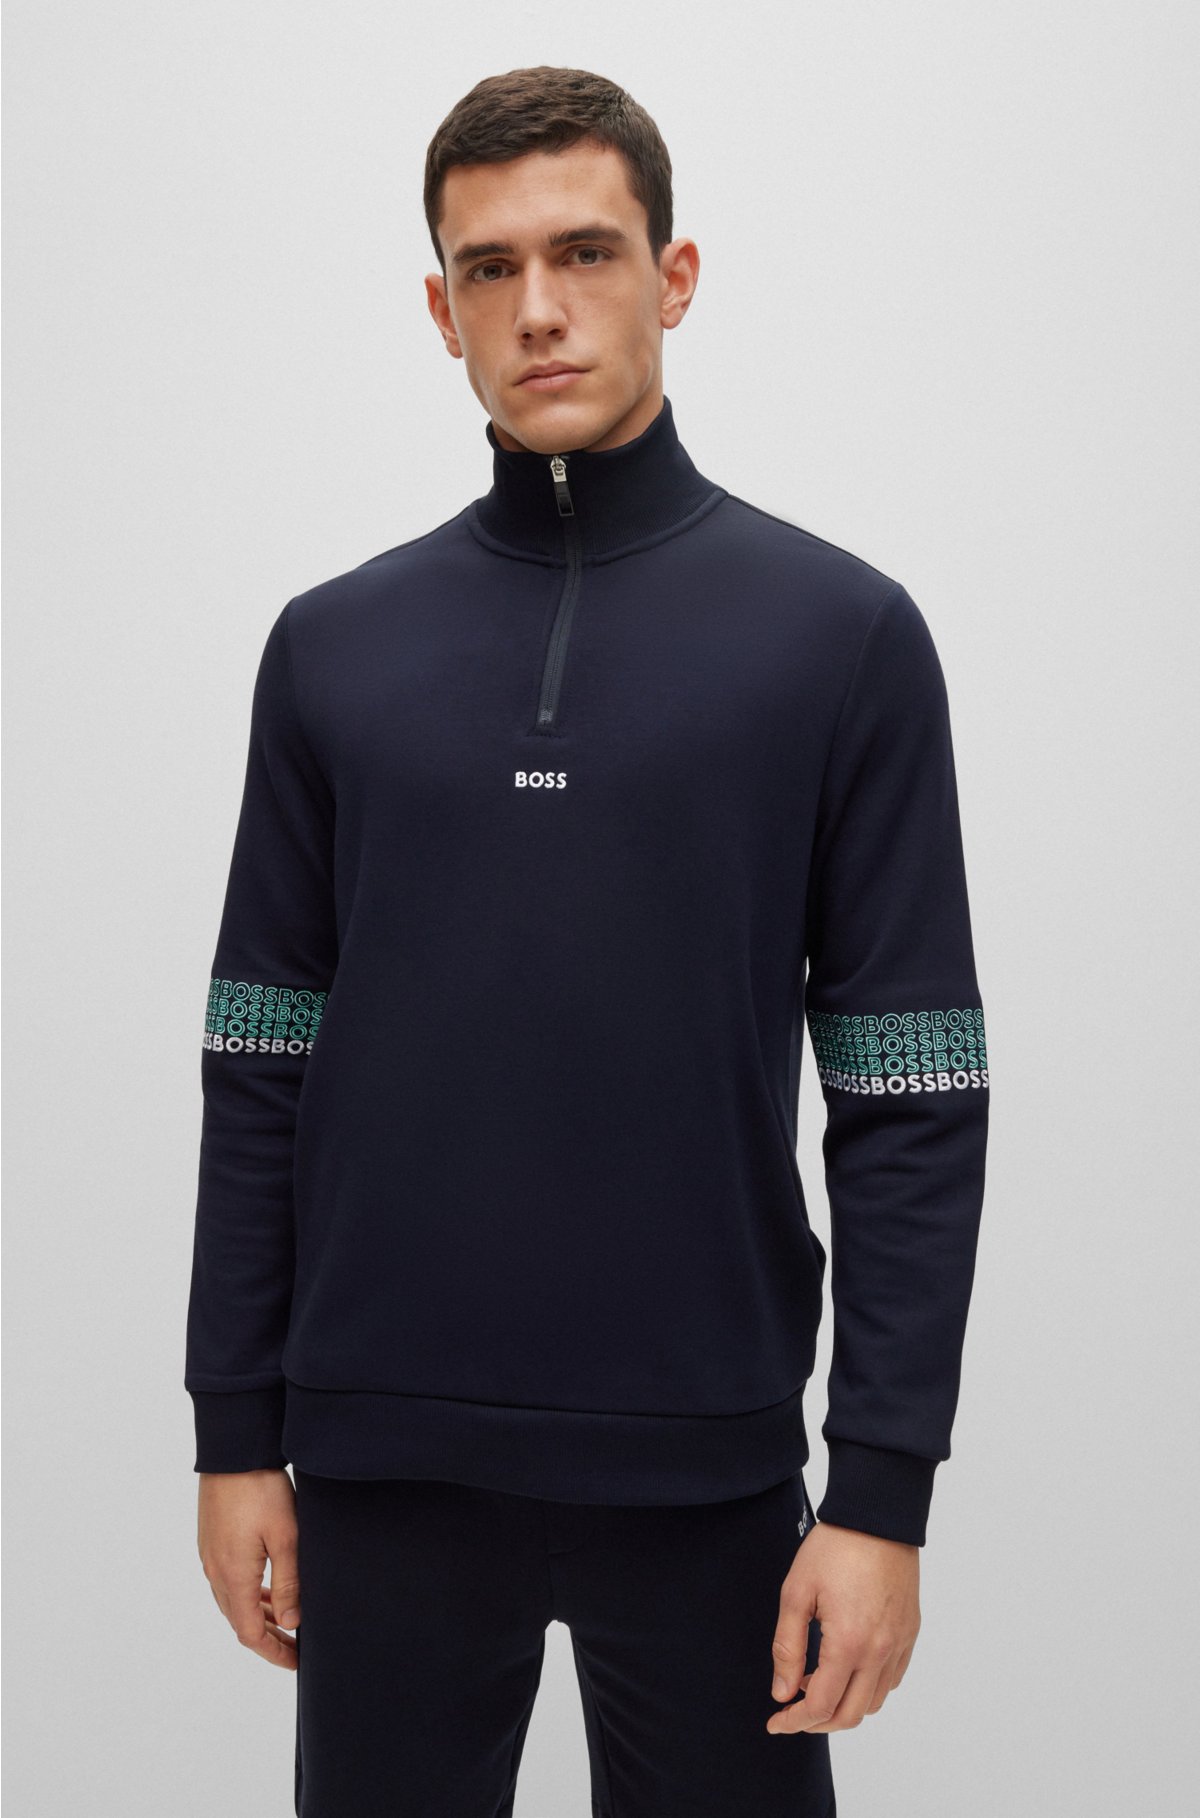 BOSS - Zip-neck sweatshirt with embroidered logos